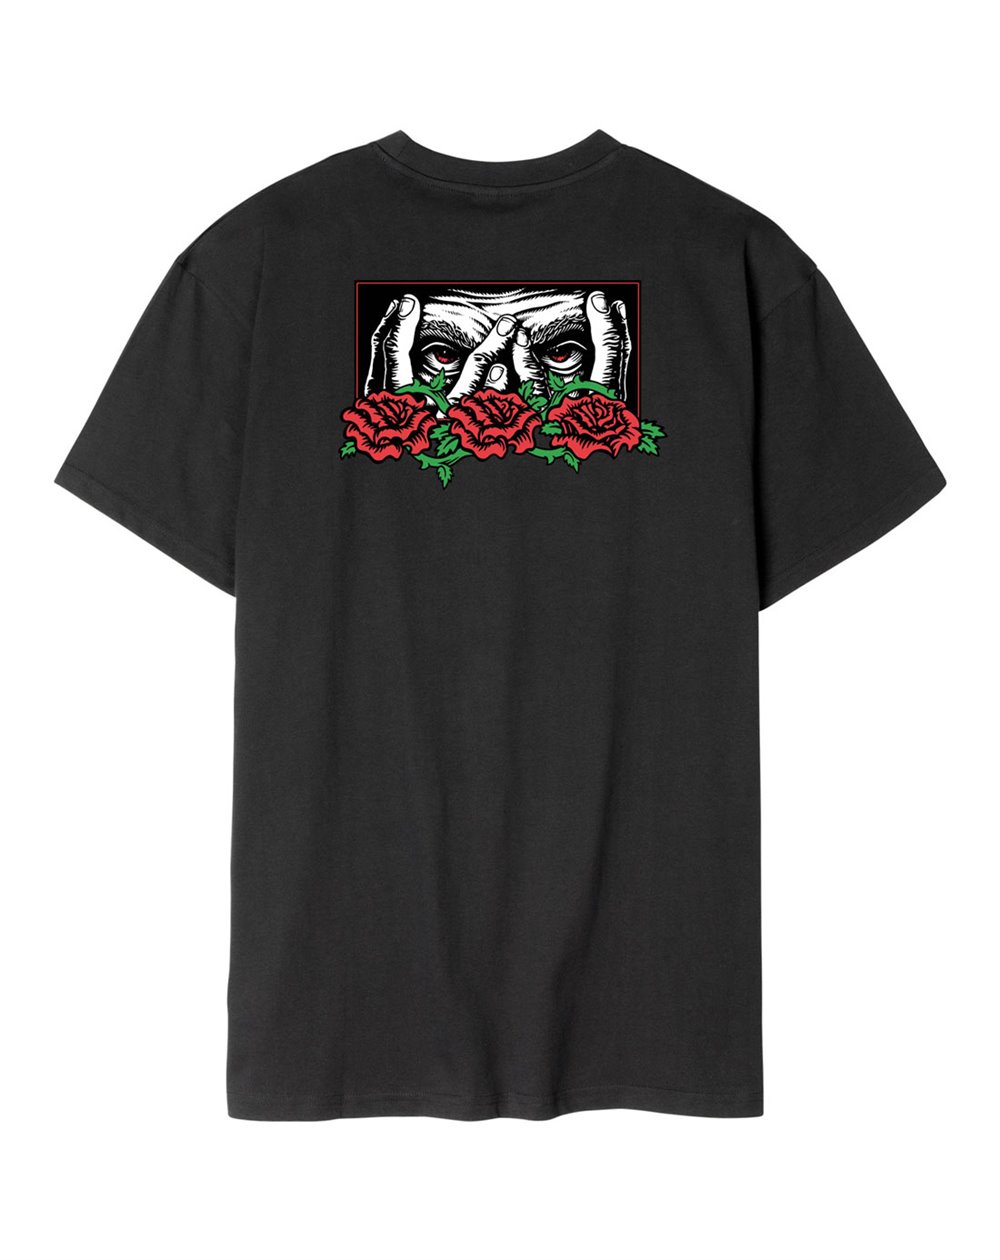 Santa Cruz T-Shirt Homme Dressen Roses Ever-Slick (Black)